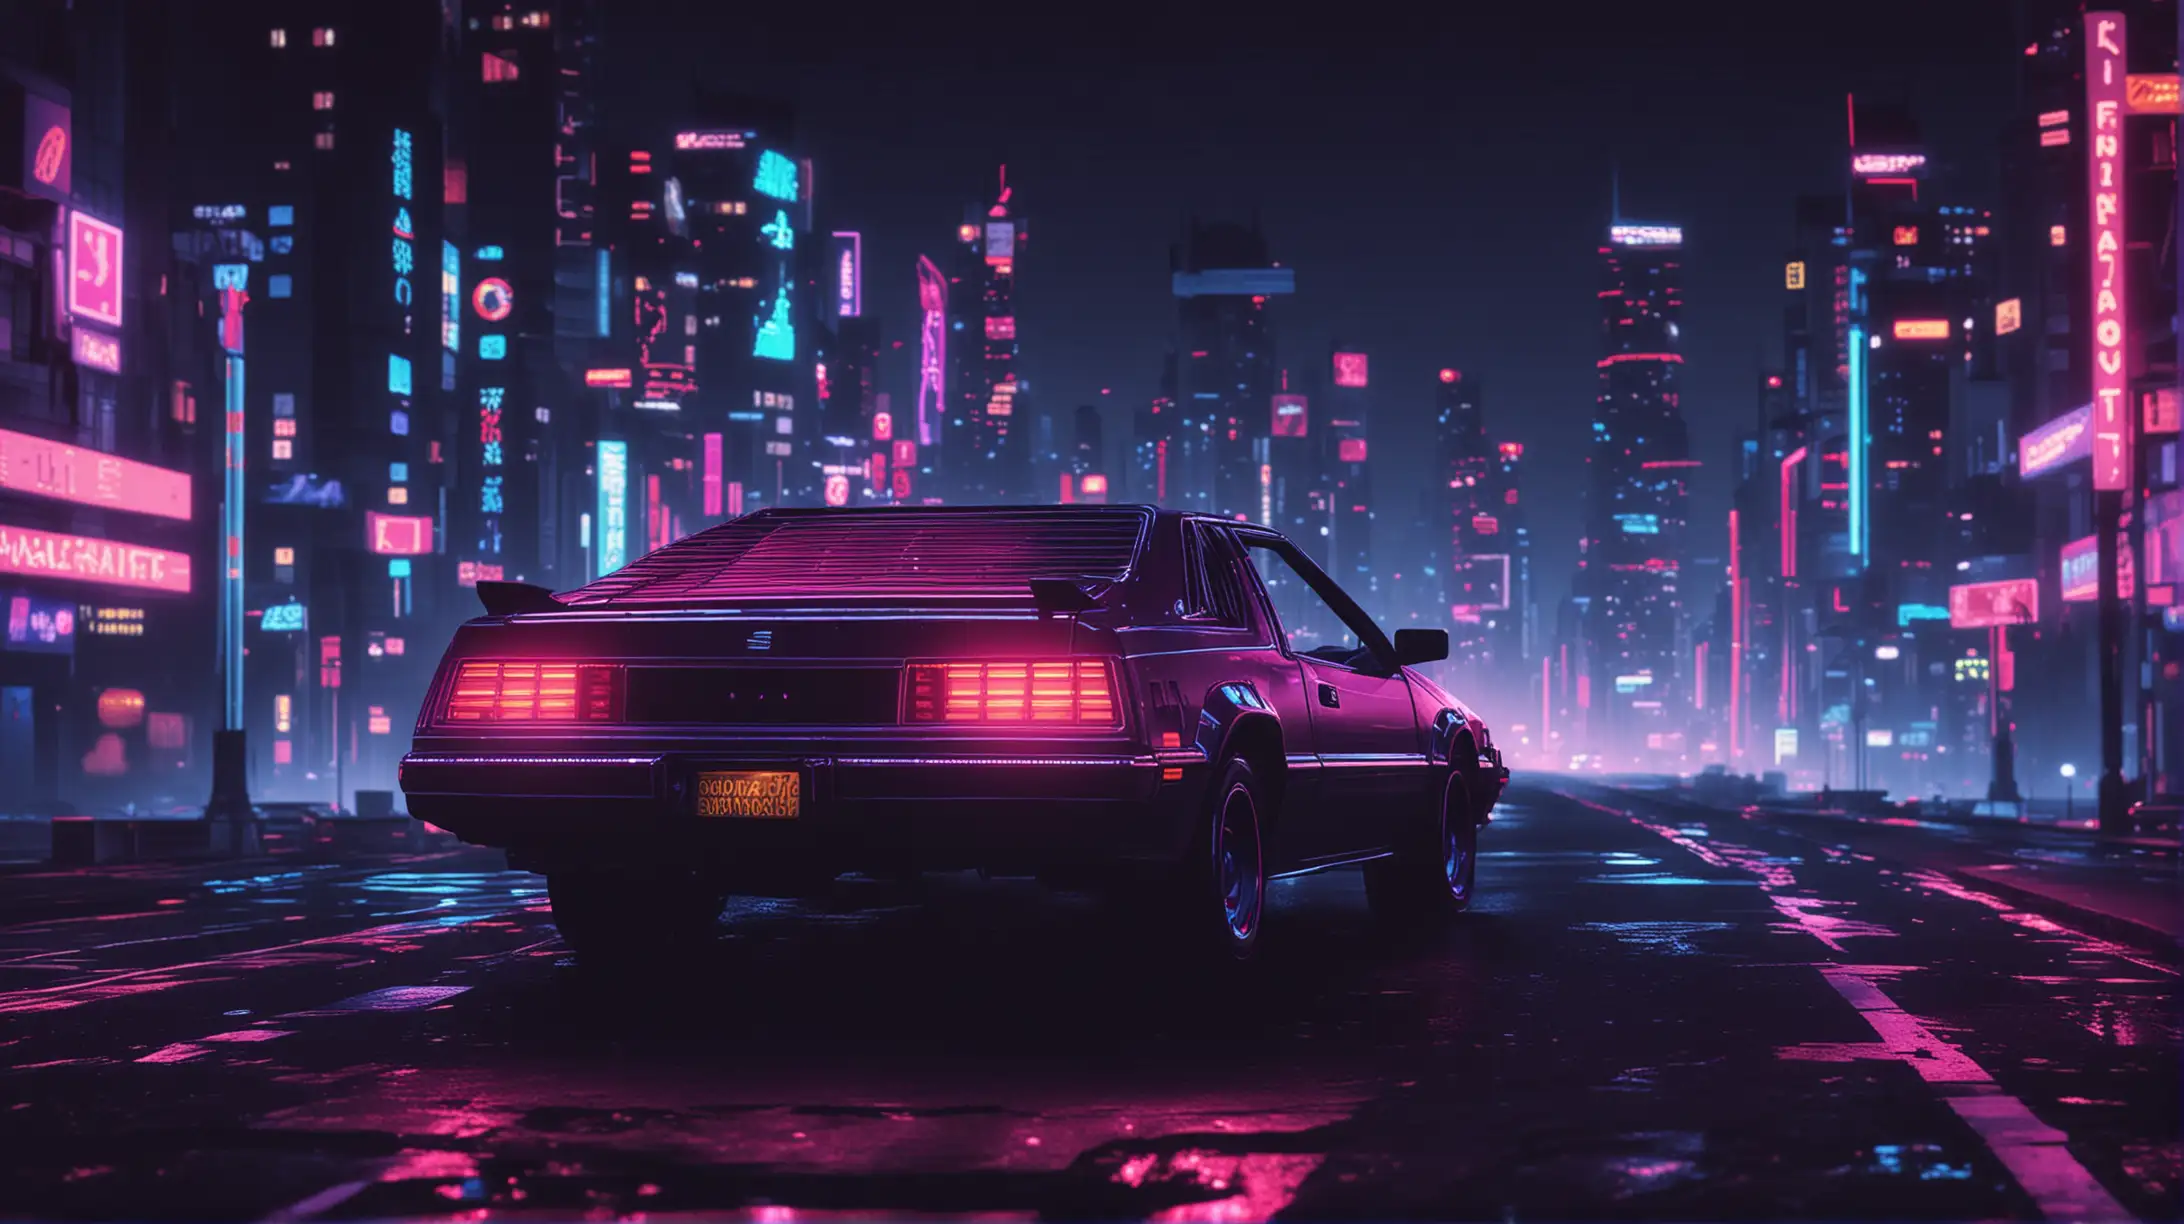 Retrowave Car Driving Through NeonLit Night Cityscape